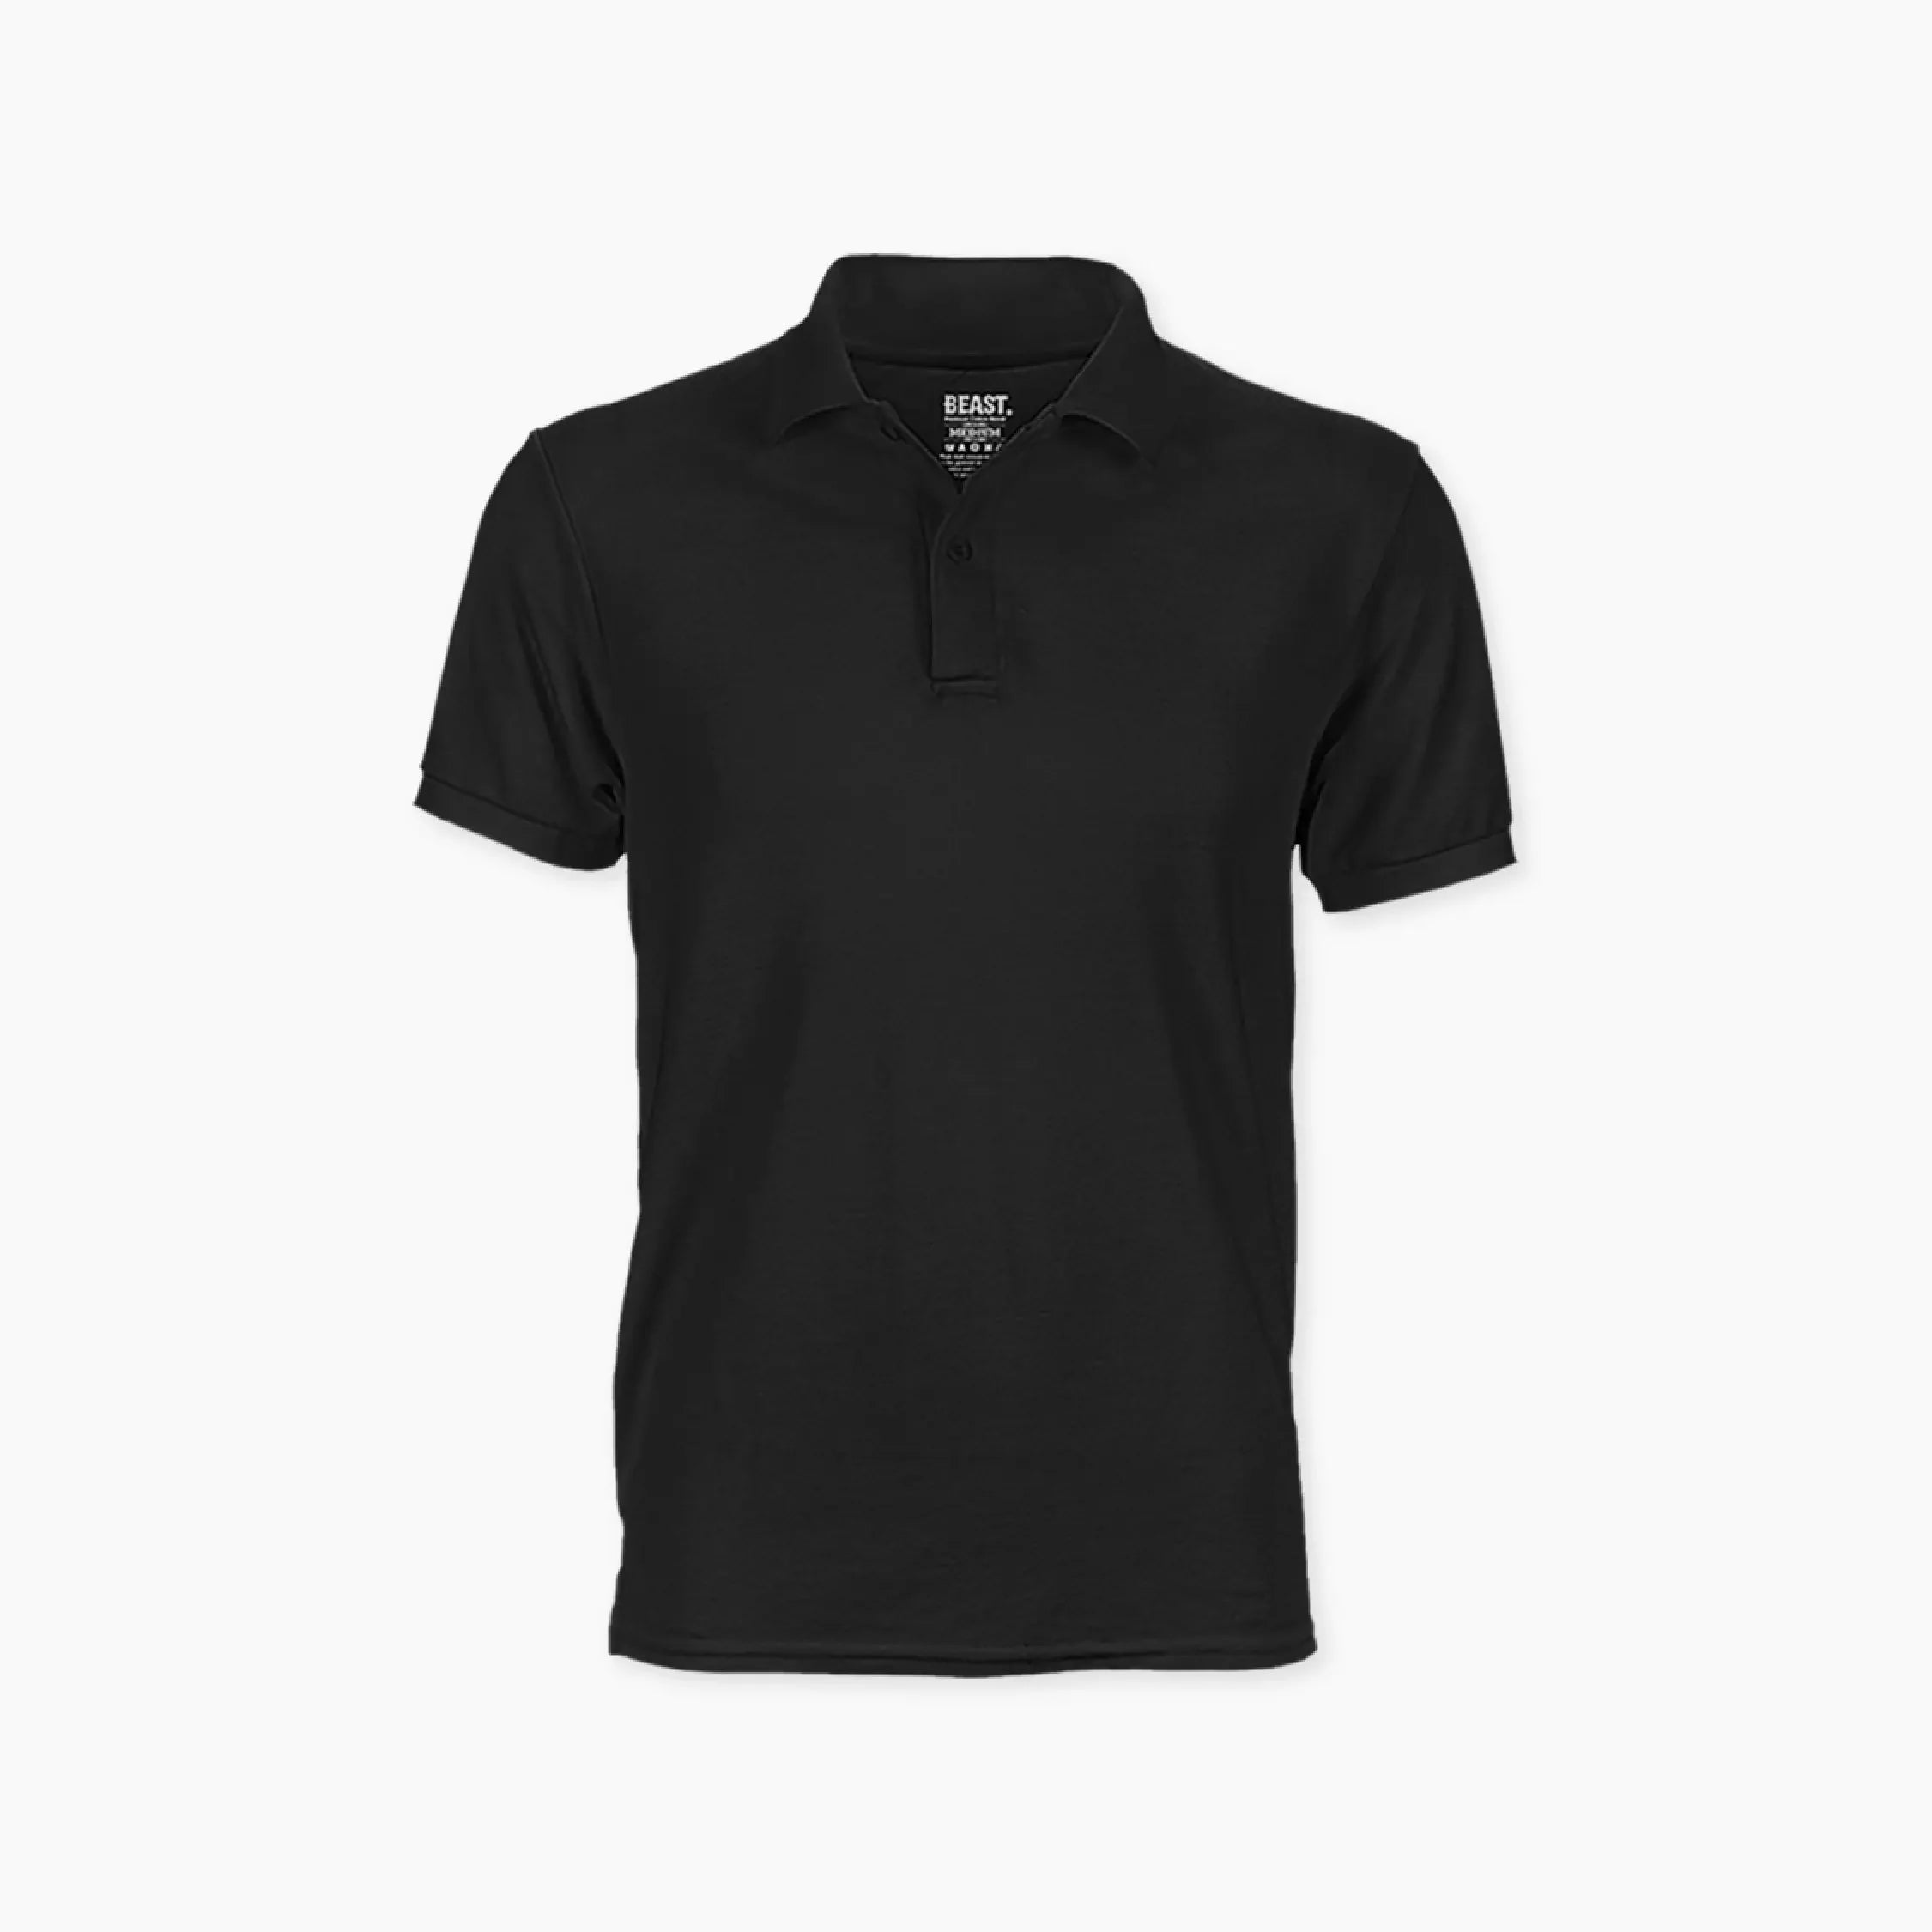 beast-black-polo-t-shirt